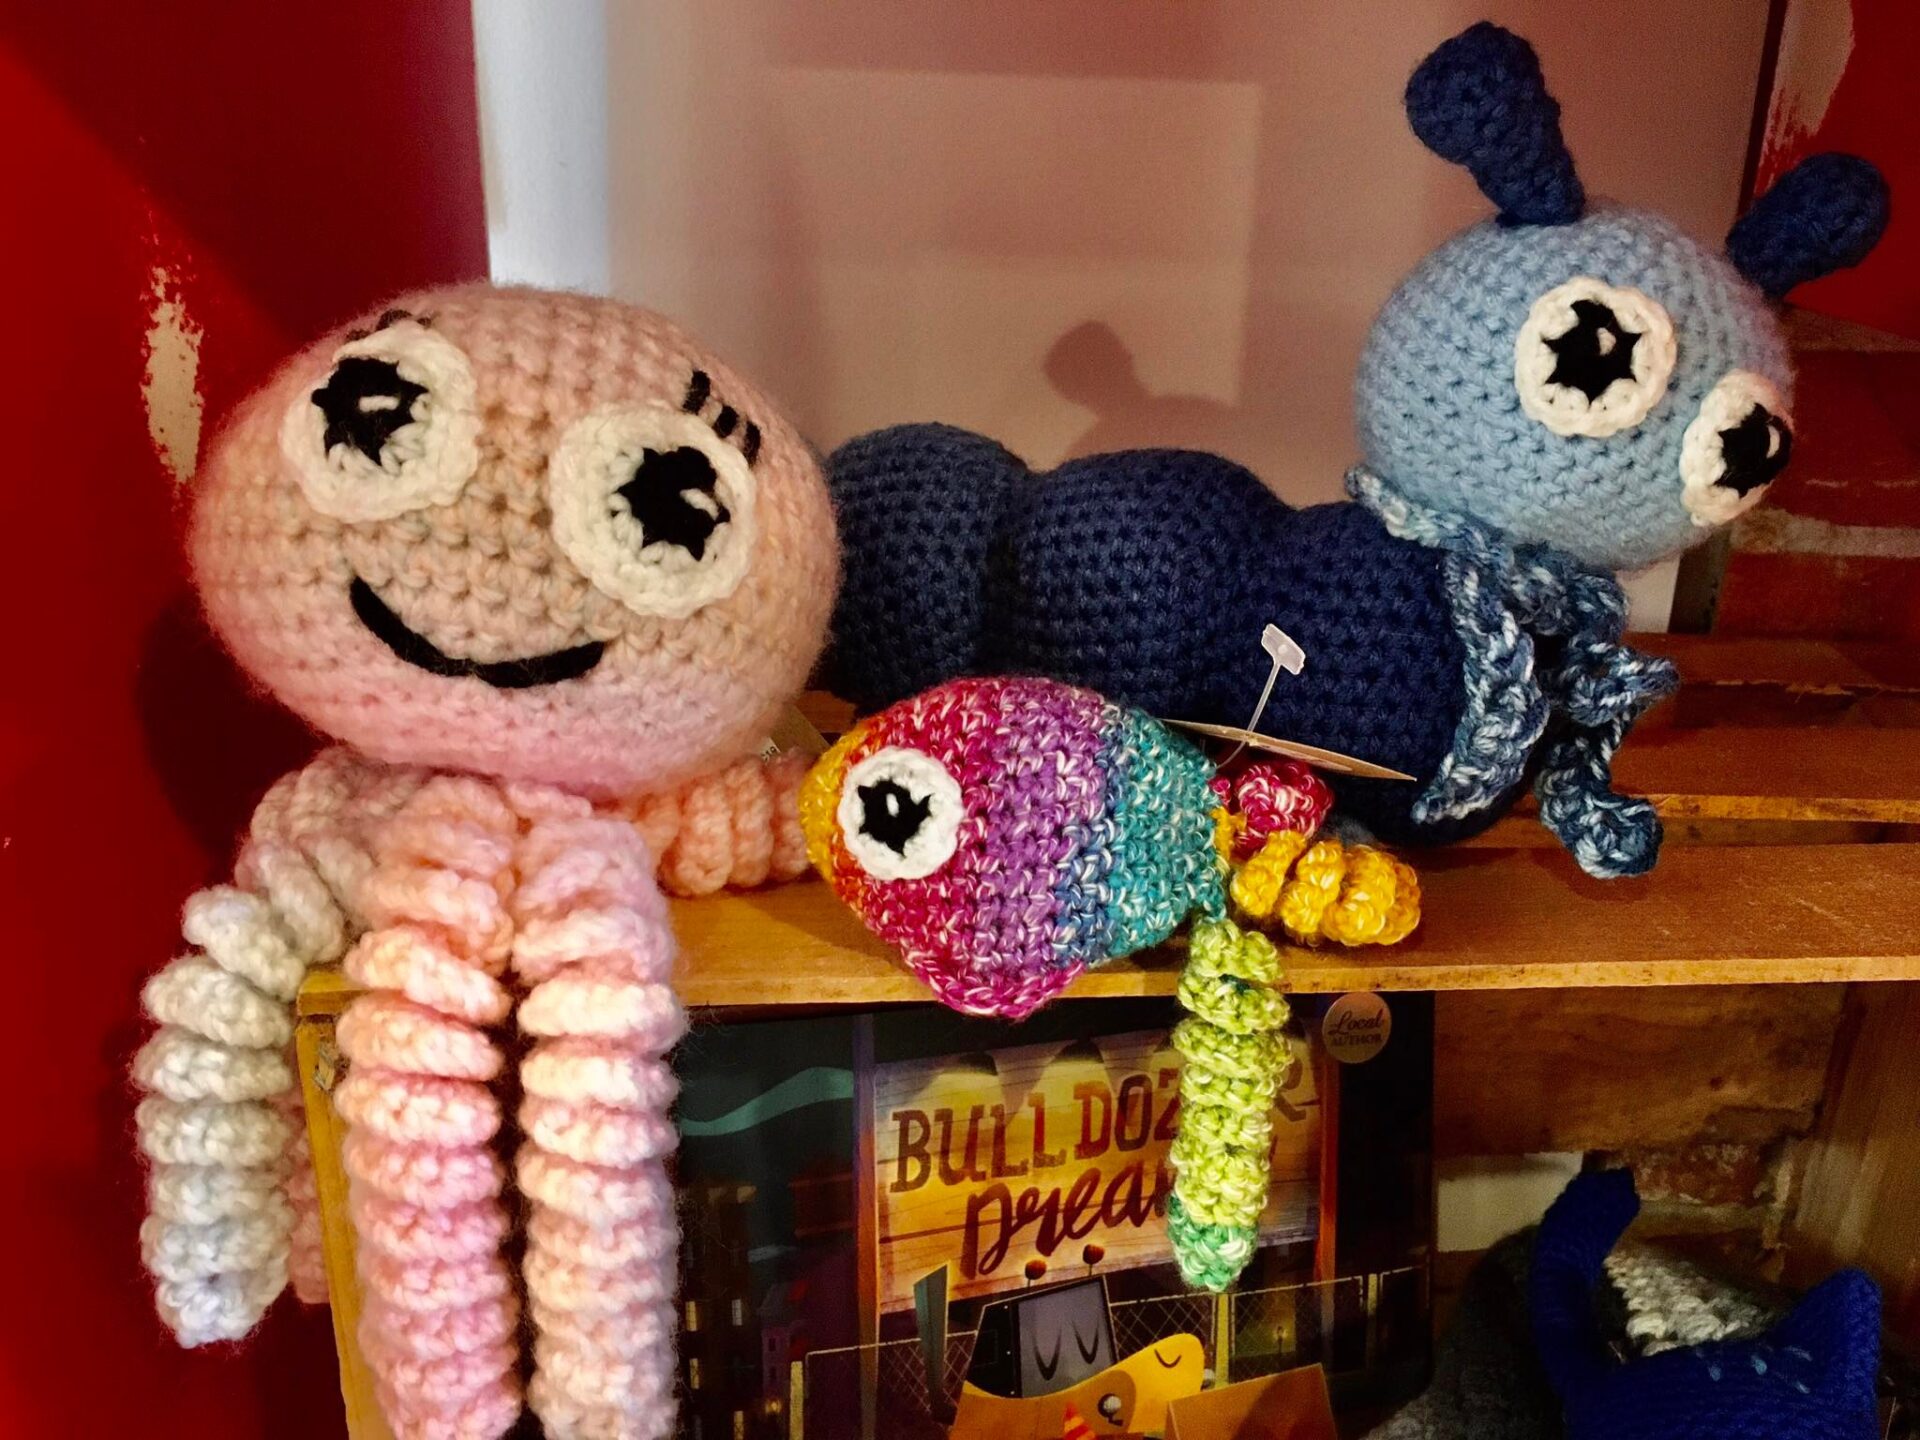 Sheila Mchone: Fiber/Crocheted Toys